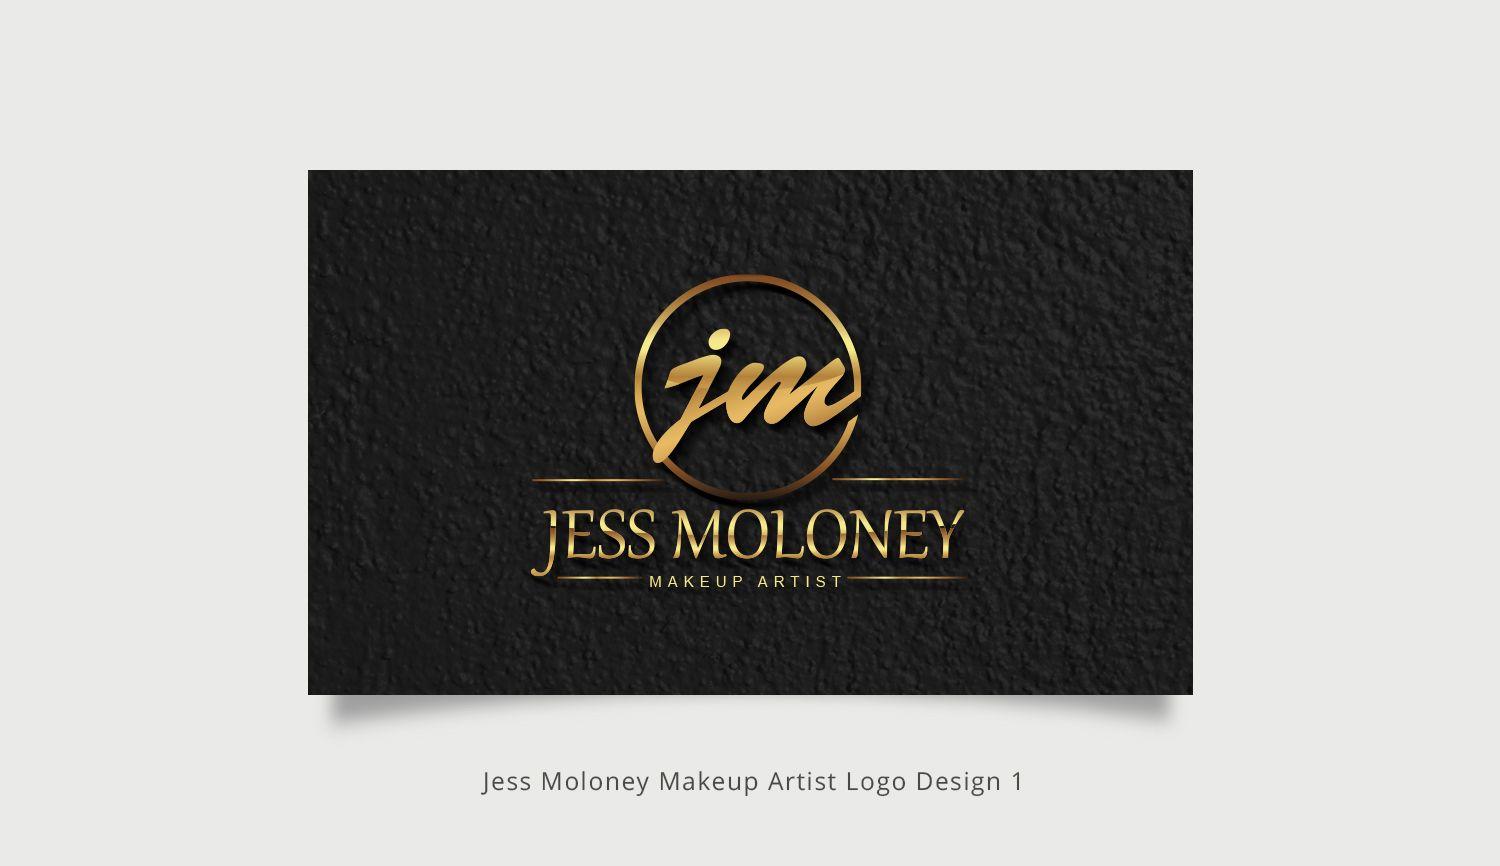 Makeup Artist Company Logo - Modern, Serious, Makeup Logo Design for Jess Moloney Makeup Artist ...